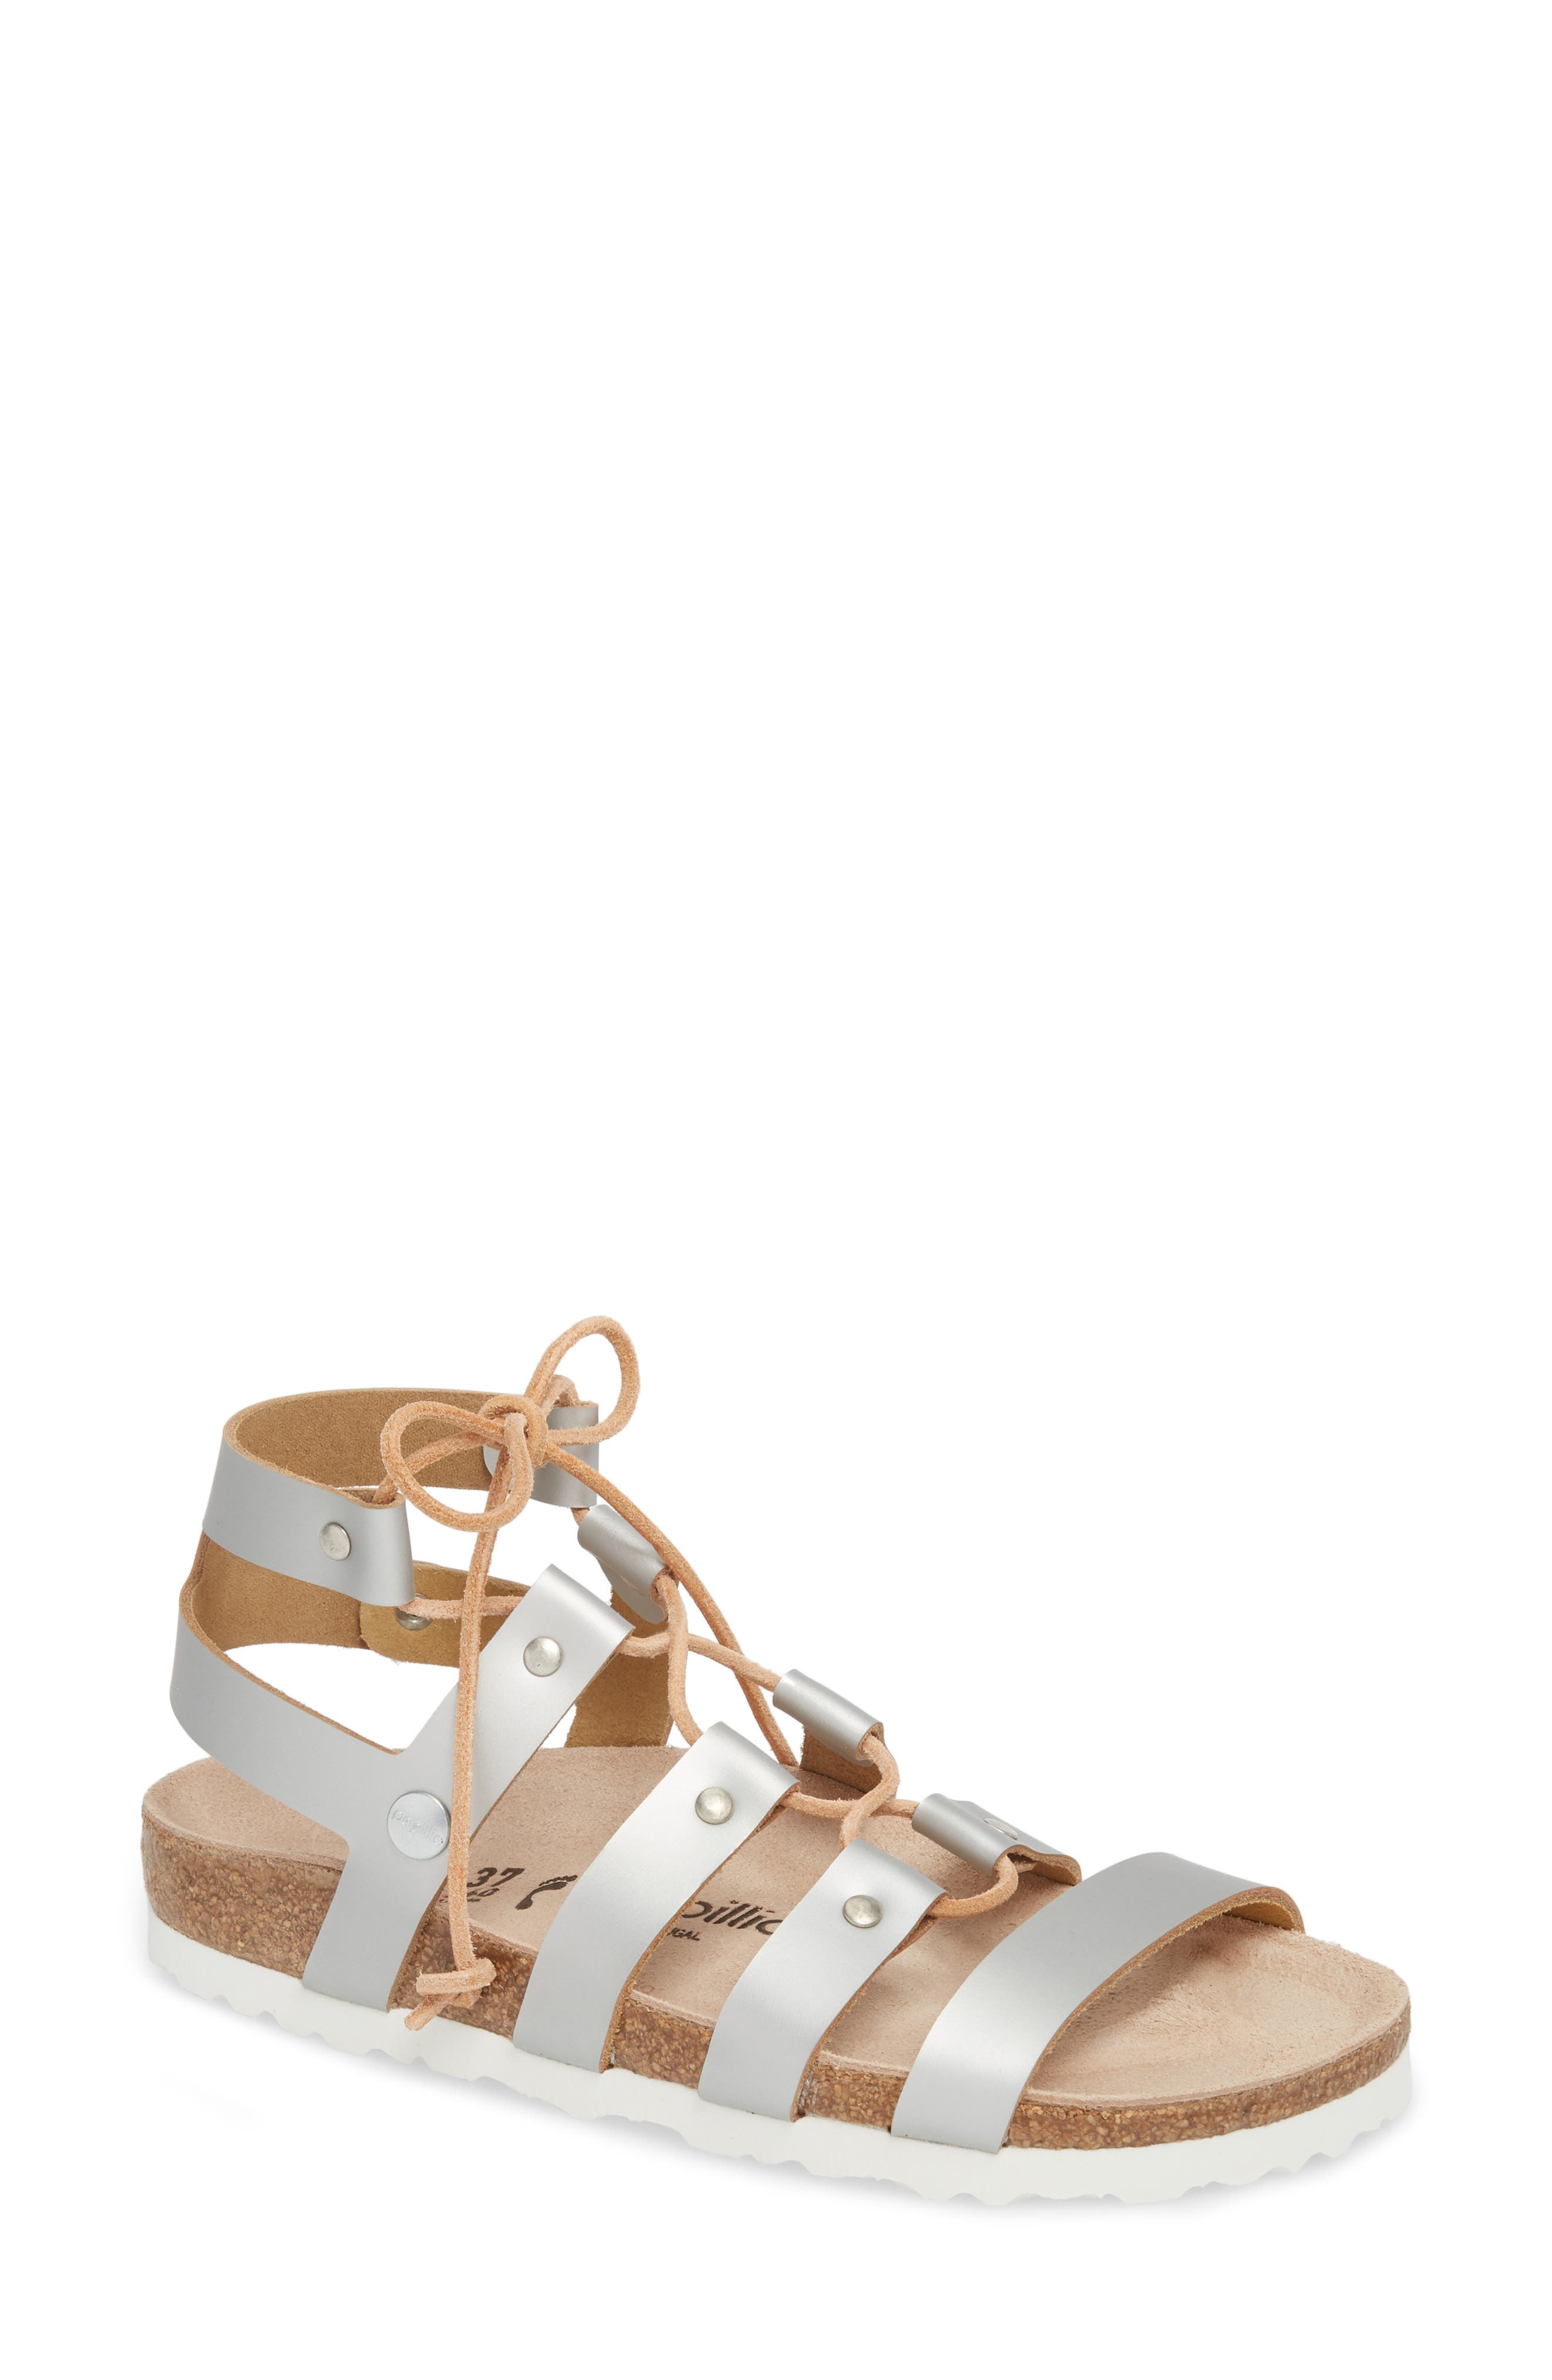 papillio by birkenstock cleo gladiator sandal